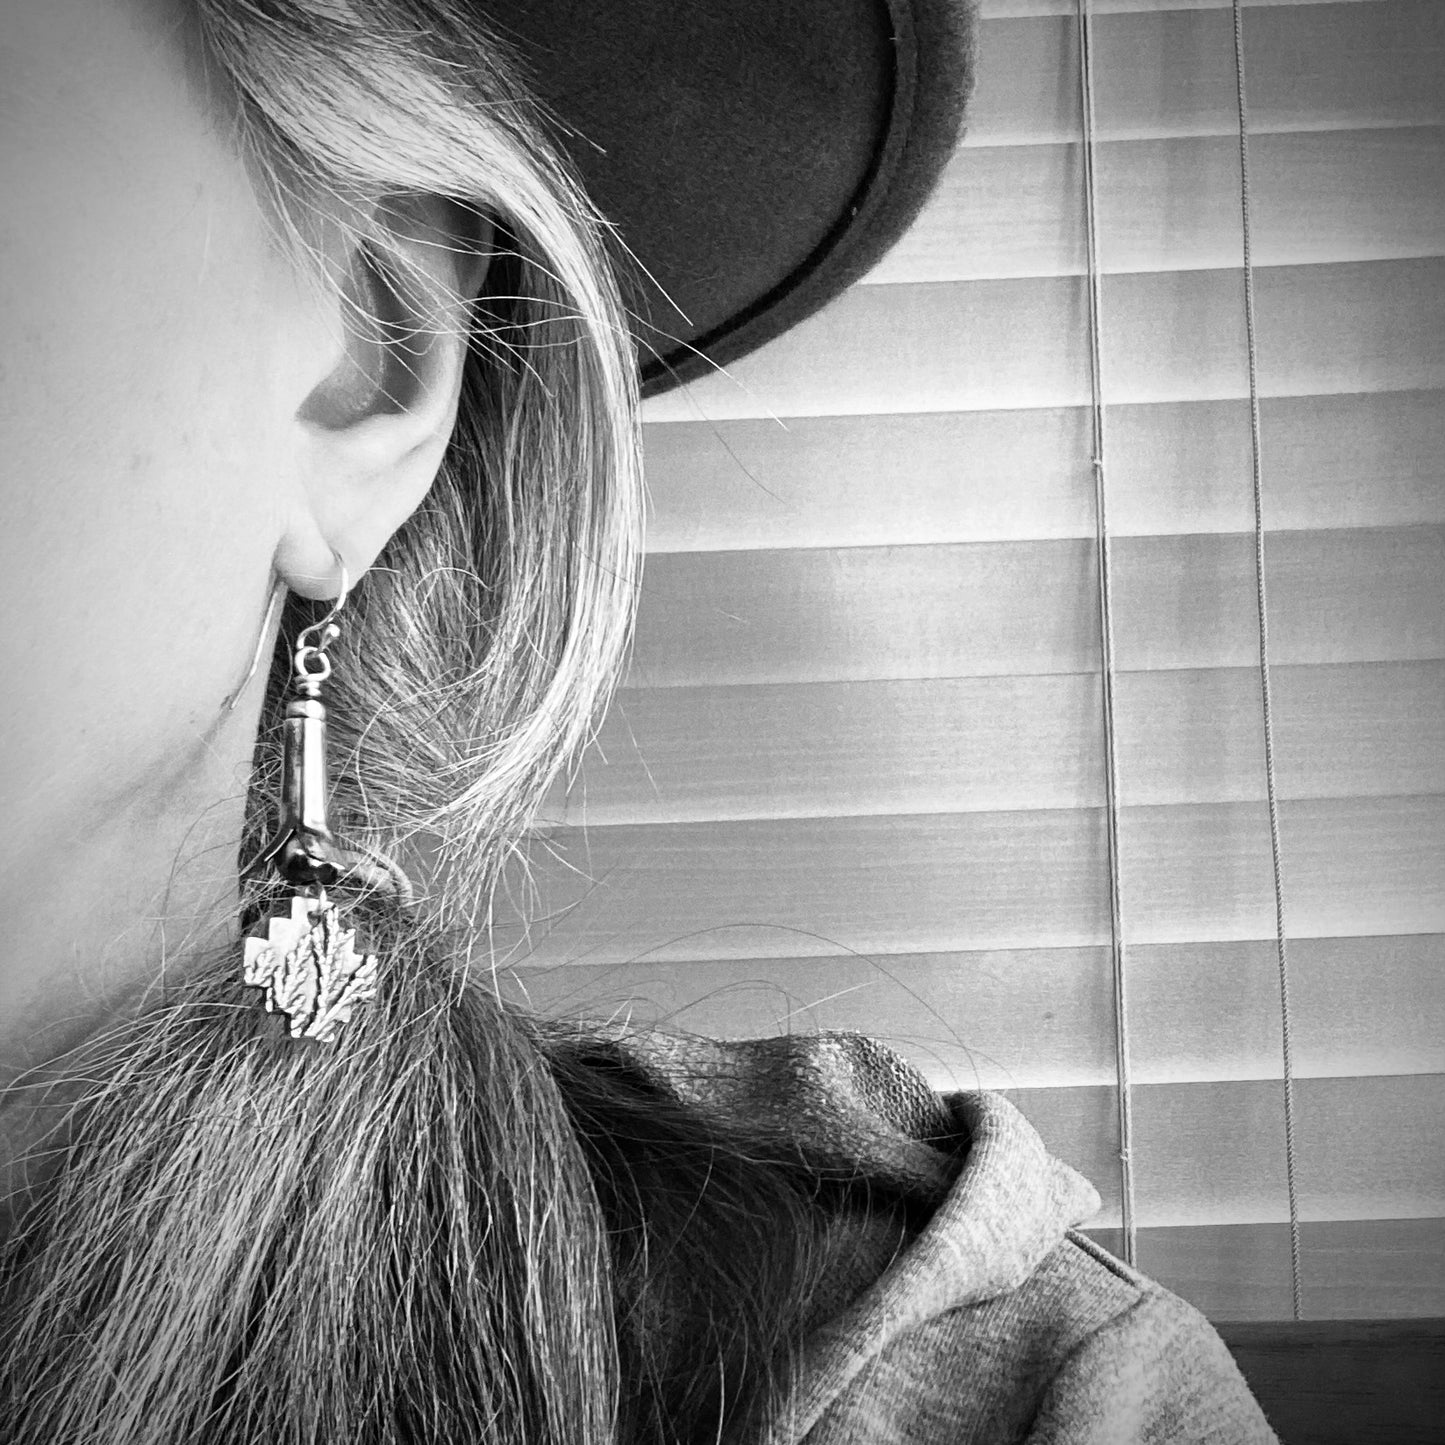 Silver Squash Blossom Earrings with Cedar Crosses